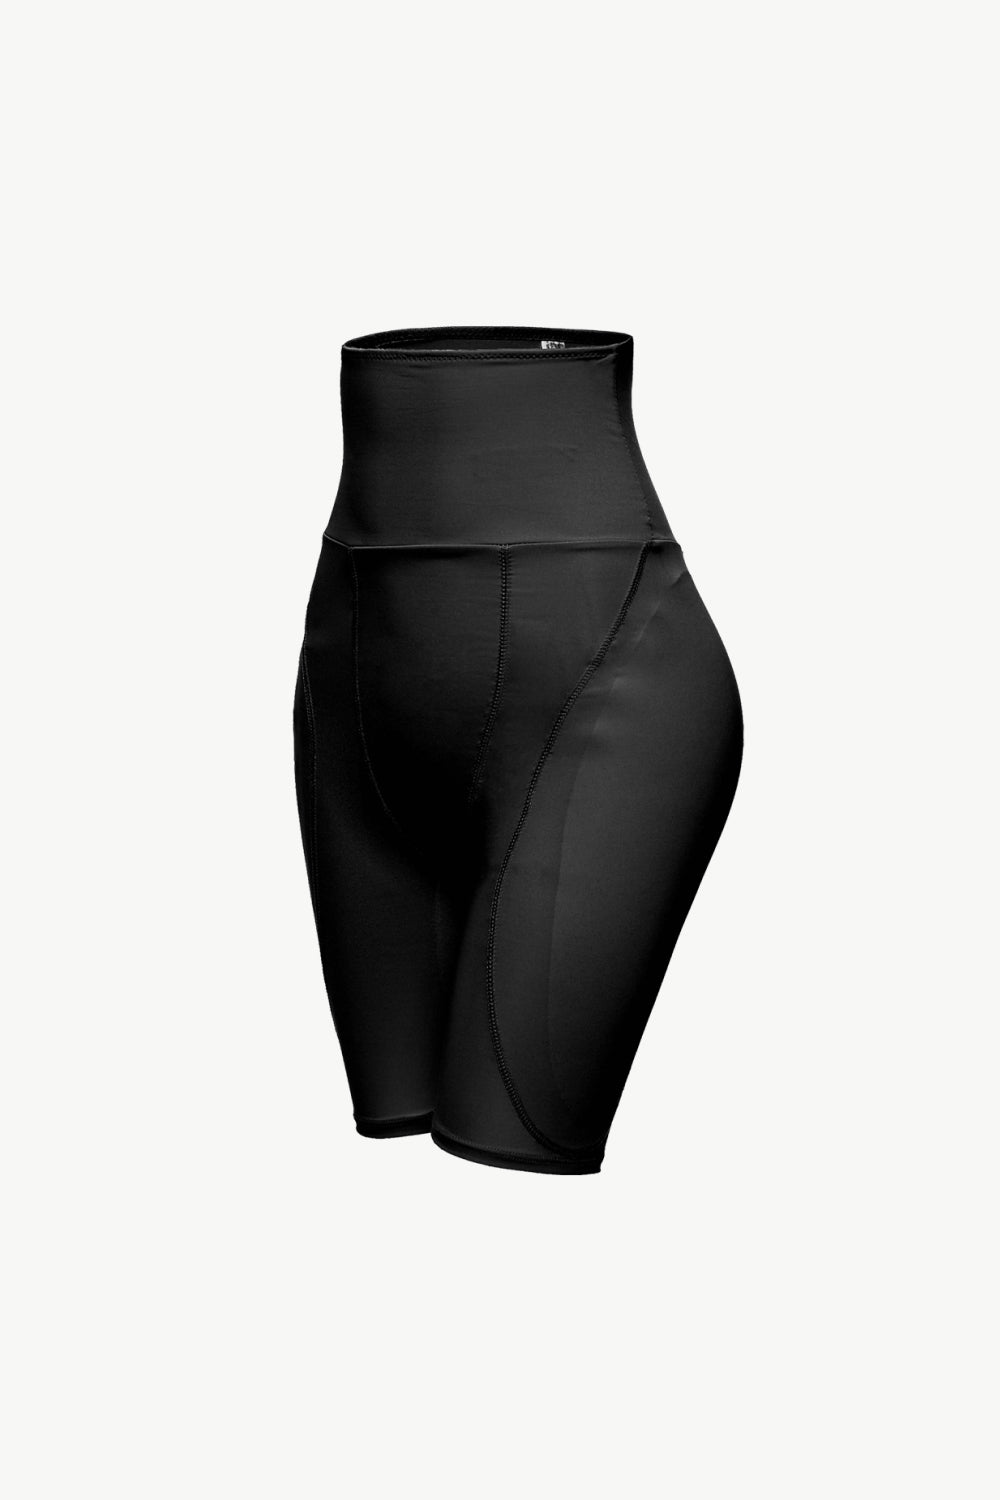 Full Size High Waisted Pull-On Shaping Shorts - Shah S. Sahota